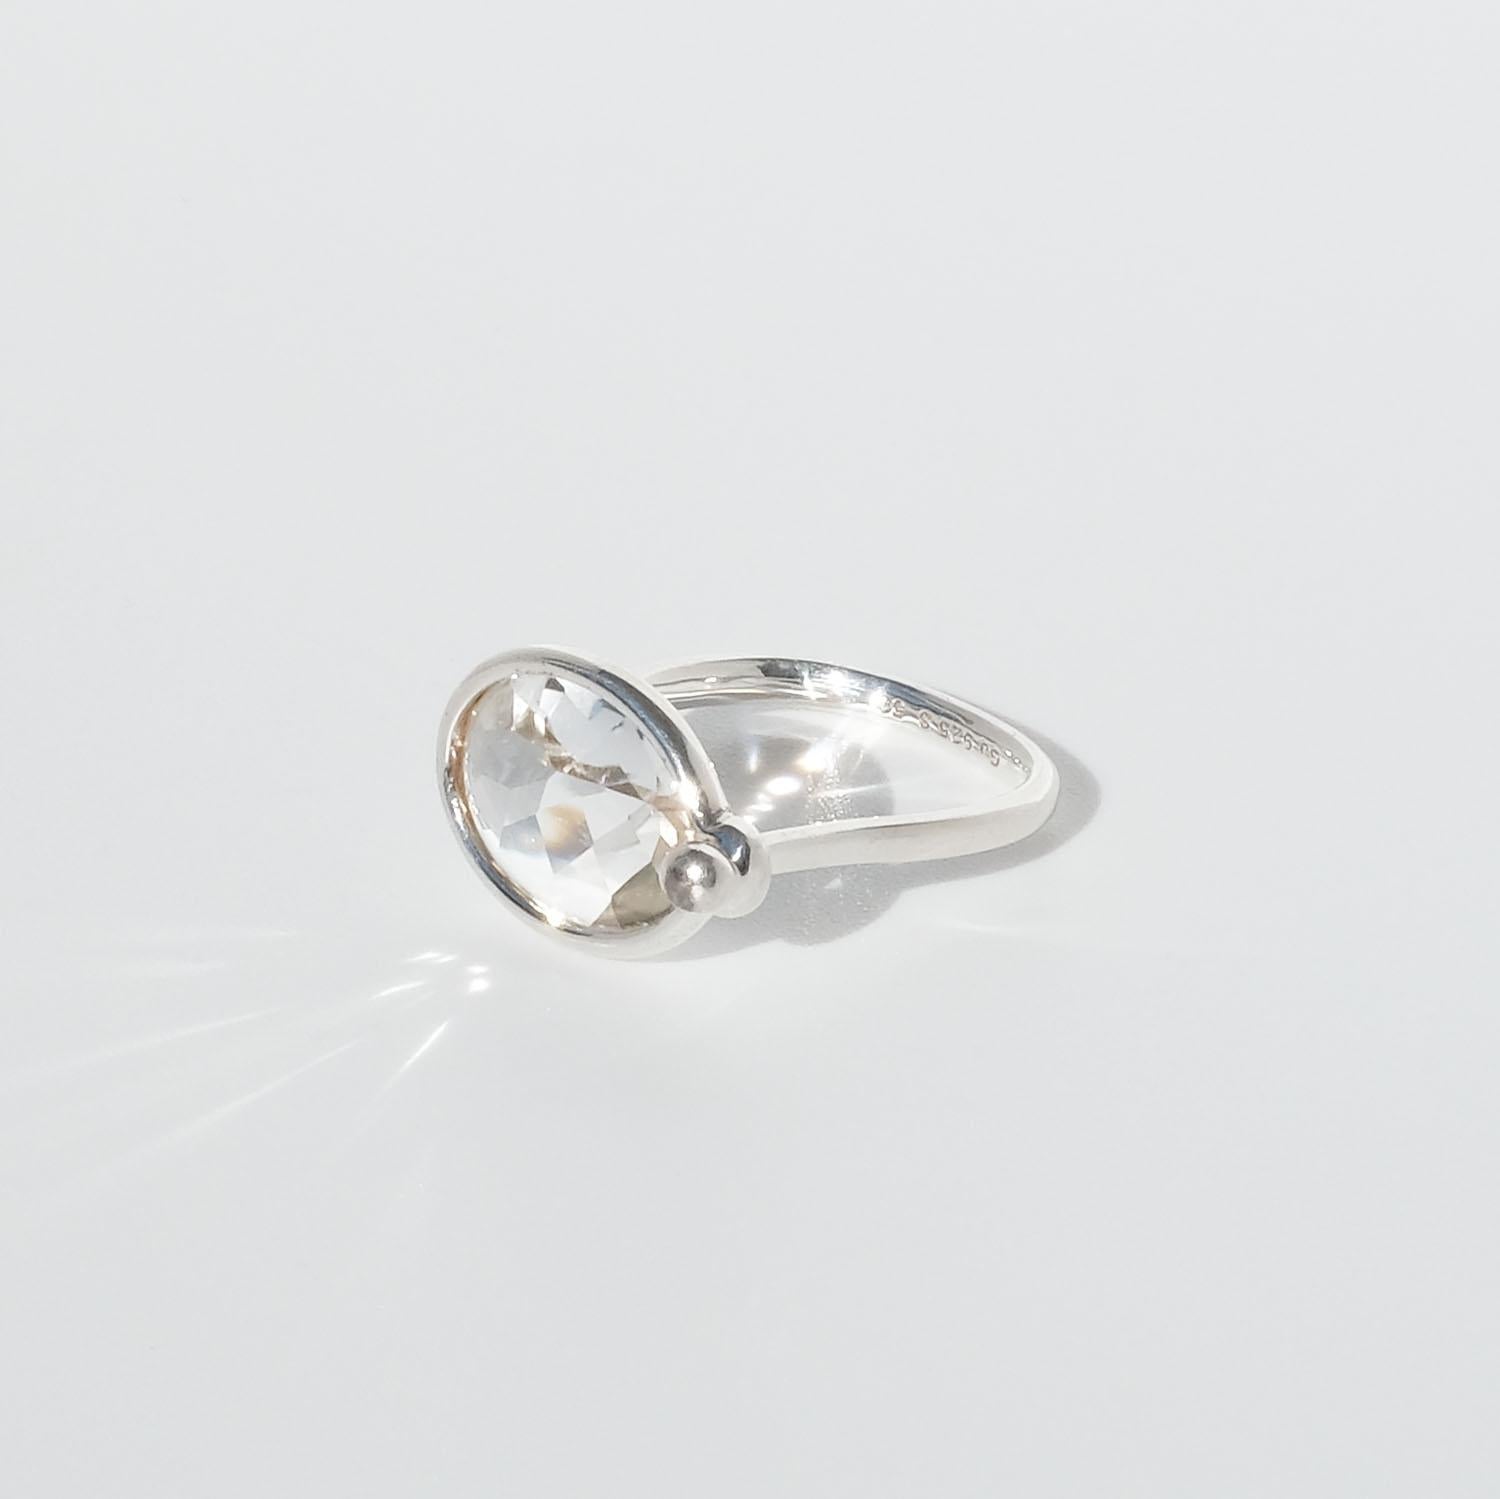 Silver and Rock Crystal Ring by Vivianna Torun Bülow-Hübe for Georg Jensen 1